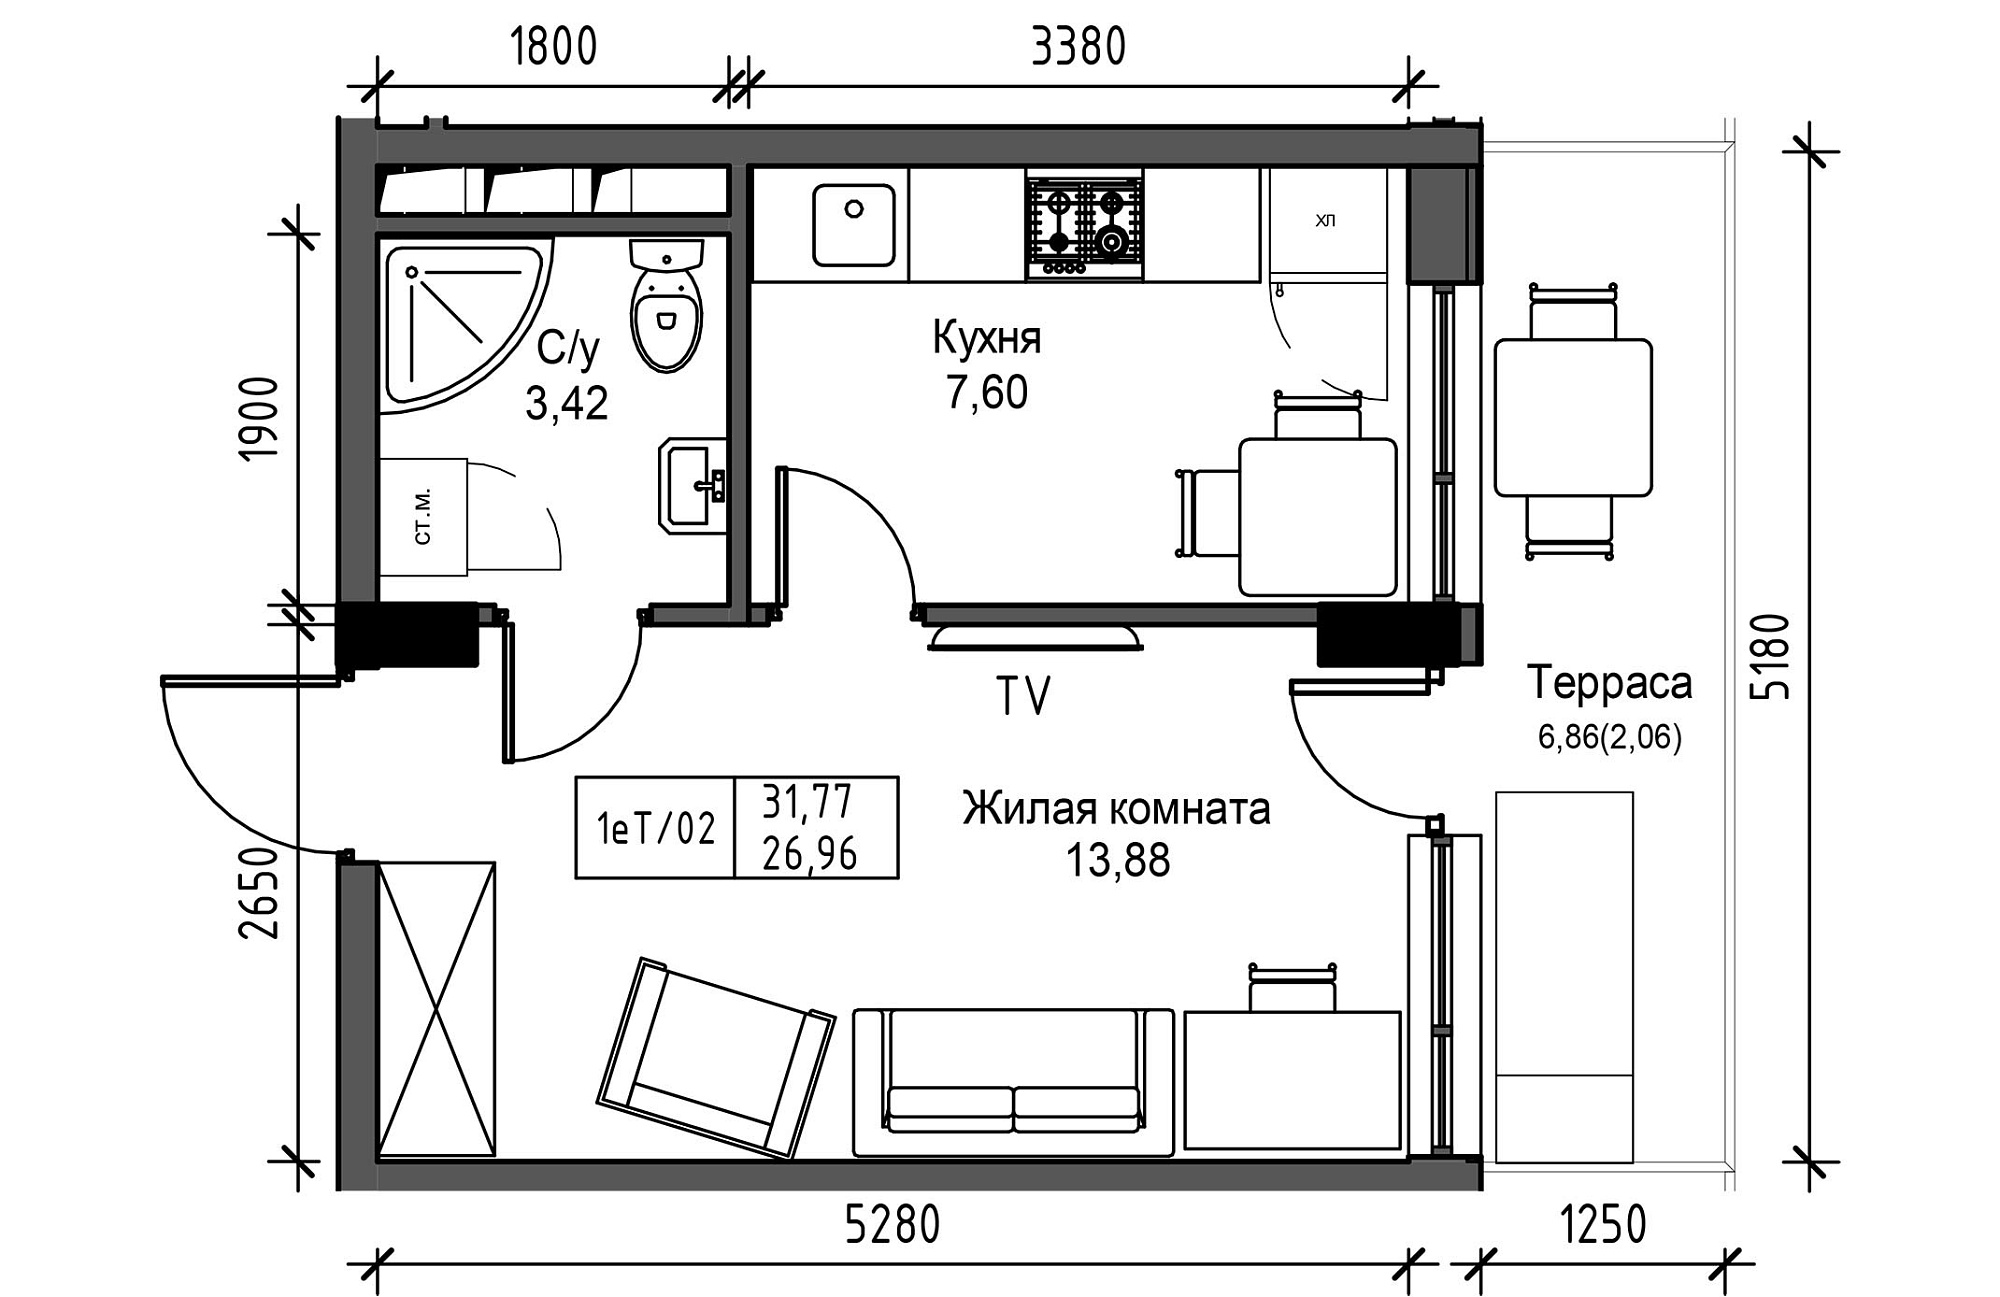 Planning 1-rm flats area 26.96m2, UM-003-11/0113.